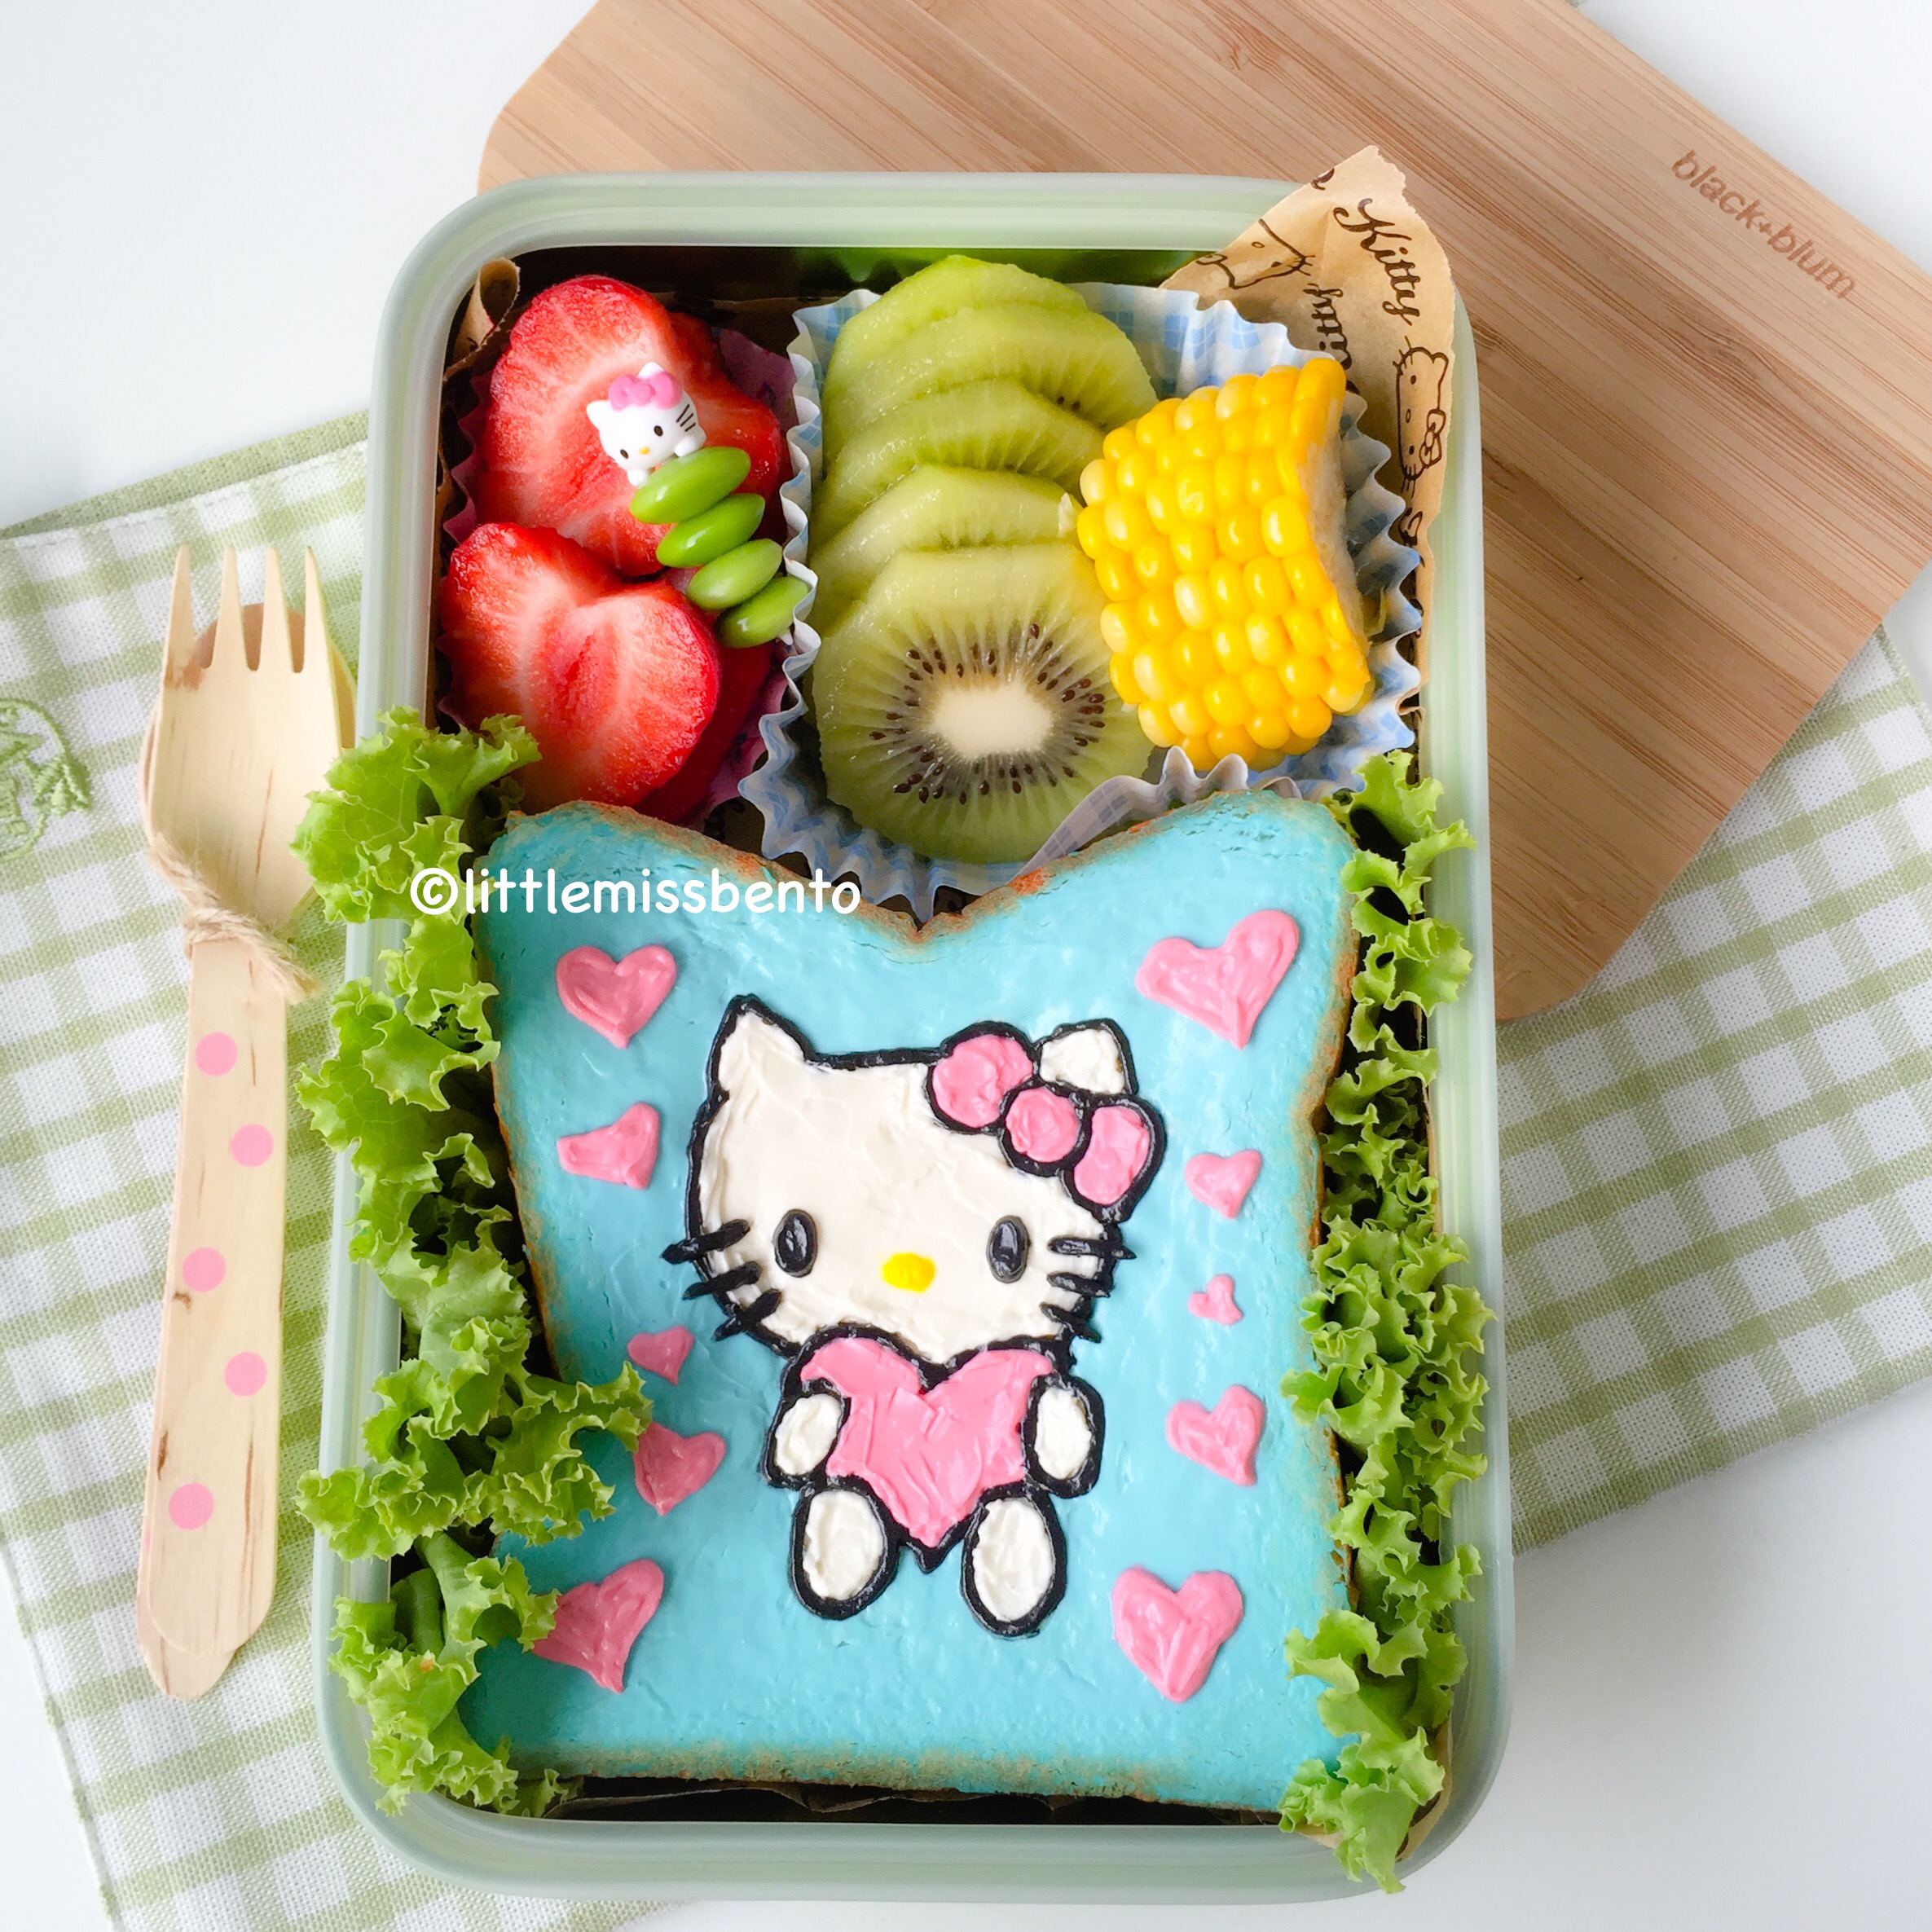 http://littlemissbentoblog.com/wp-content/uploads/2014/10/Hello-Kitty-Sandwich-Bento-1.jpg